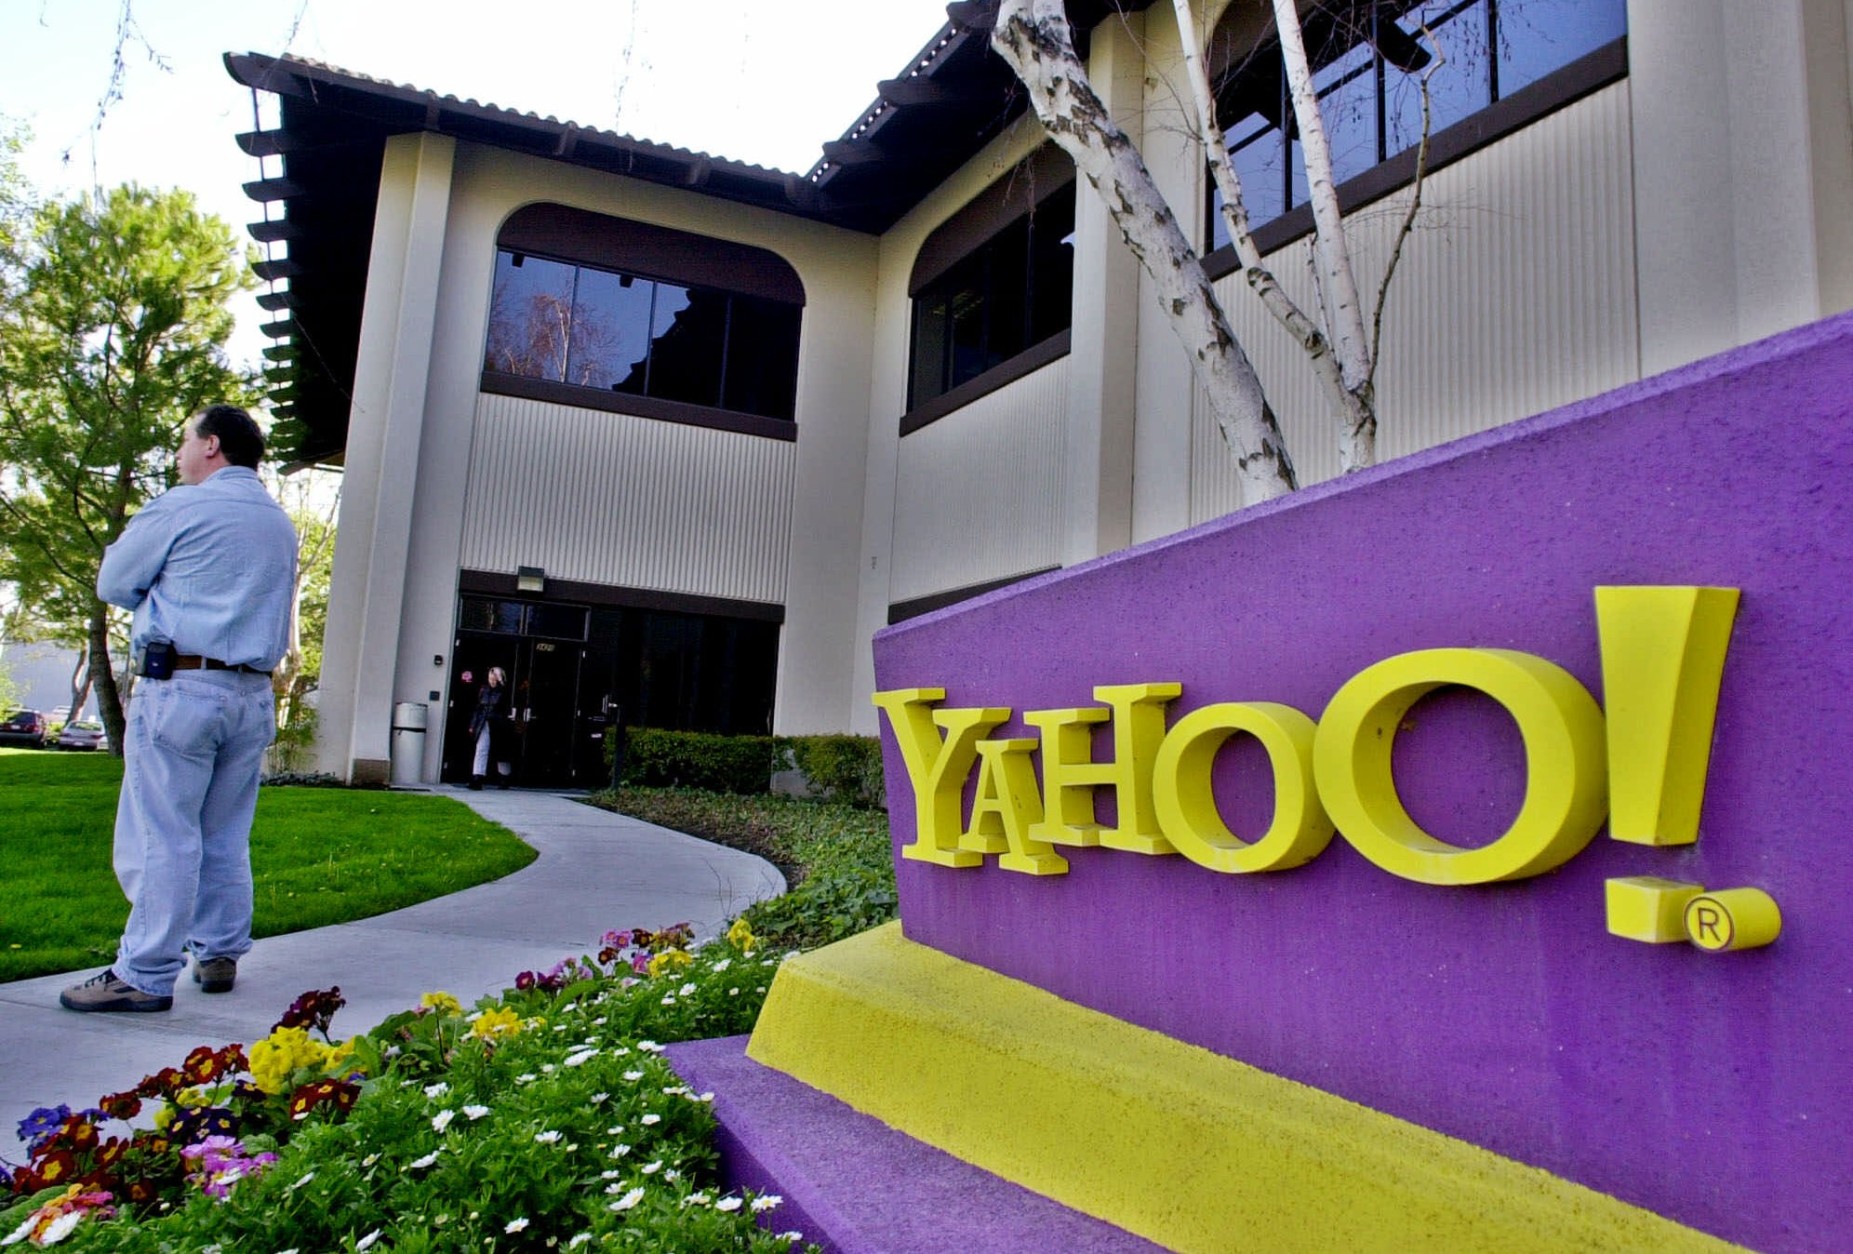 Yahoo! employee Charles Honig walks outside of Yahoo! headquarters in Santa Clara, Calif., Wednesday, March 7, 2001.  Yahoo! CEO Tim Koogle has announced he is stepping down in the wake of a poor first quarter. (AP Photo/Paul Sakuma)